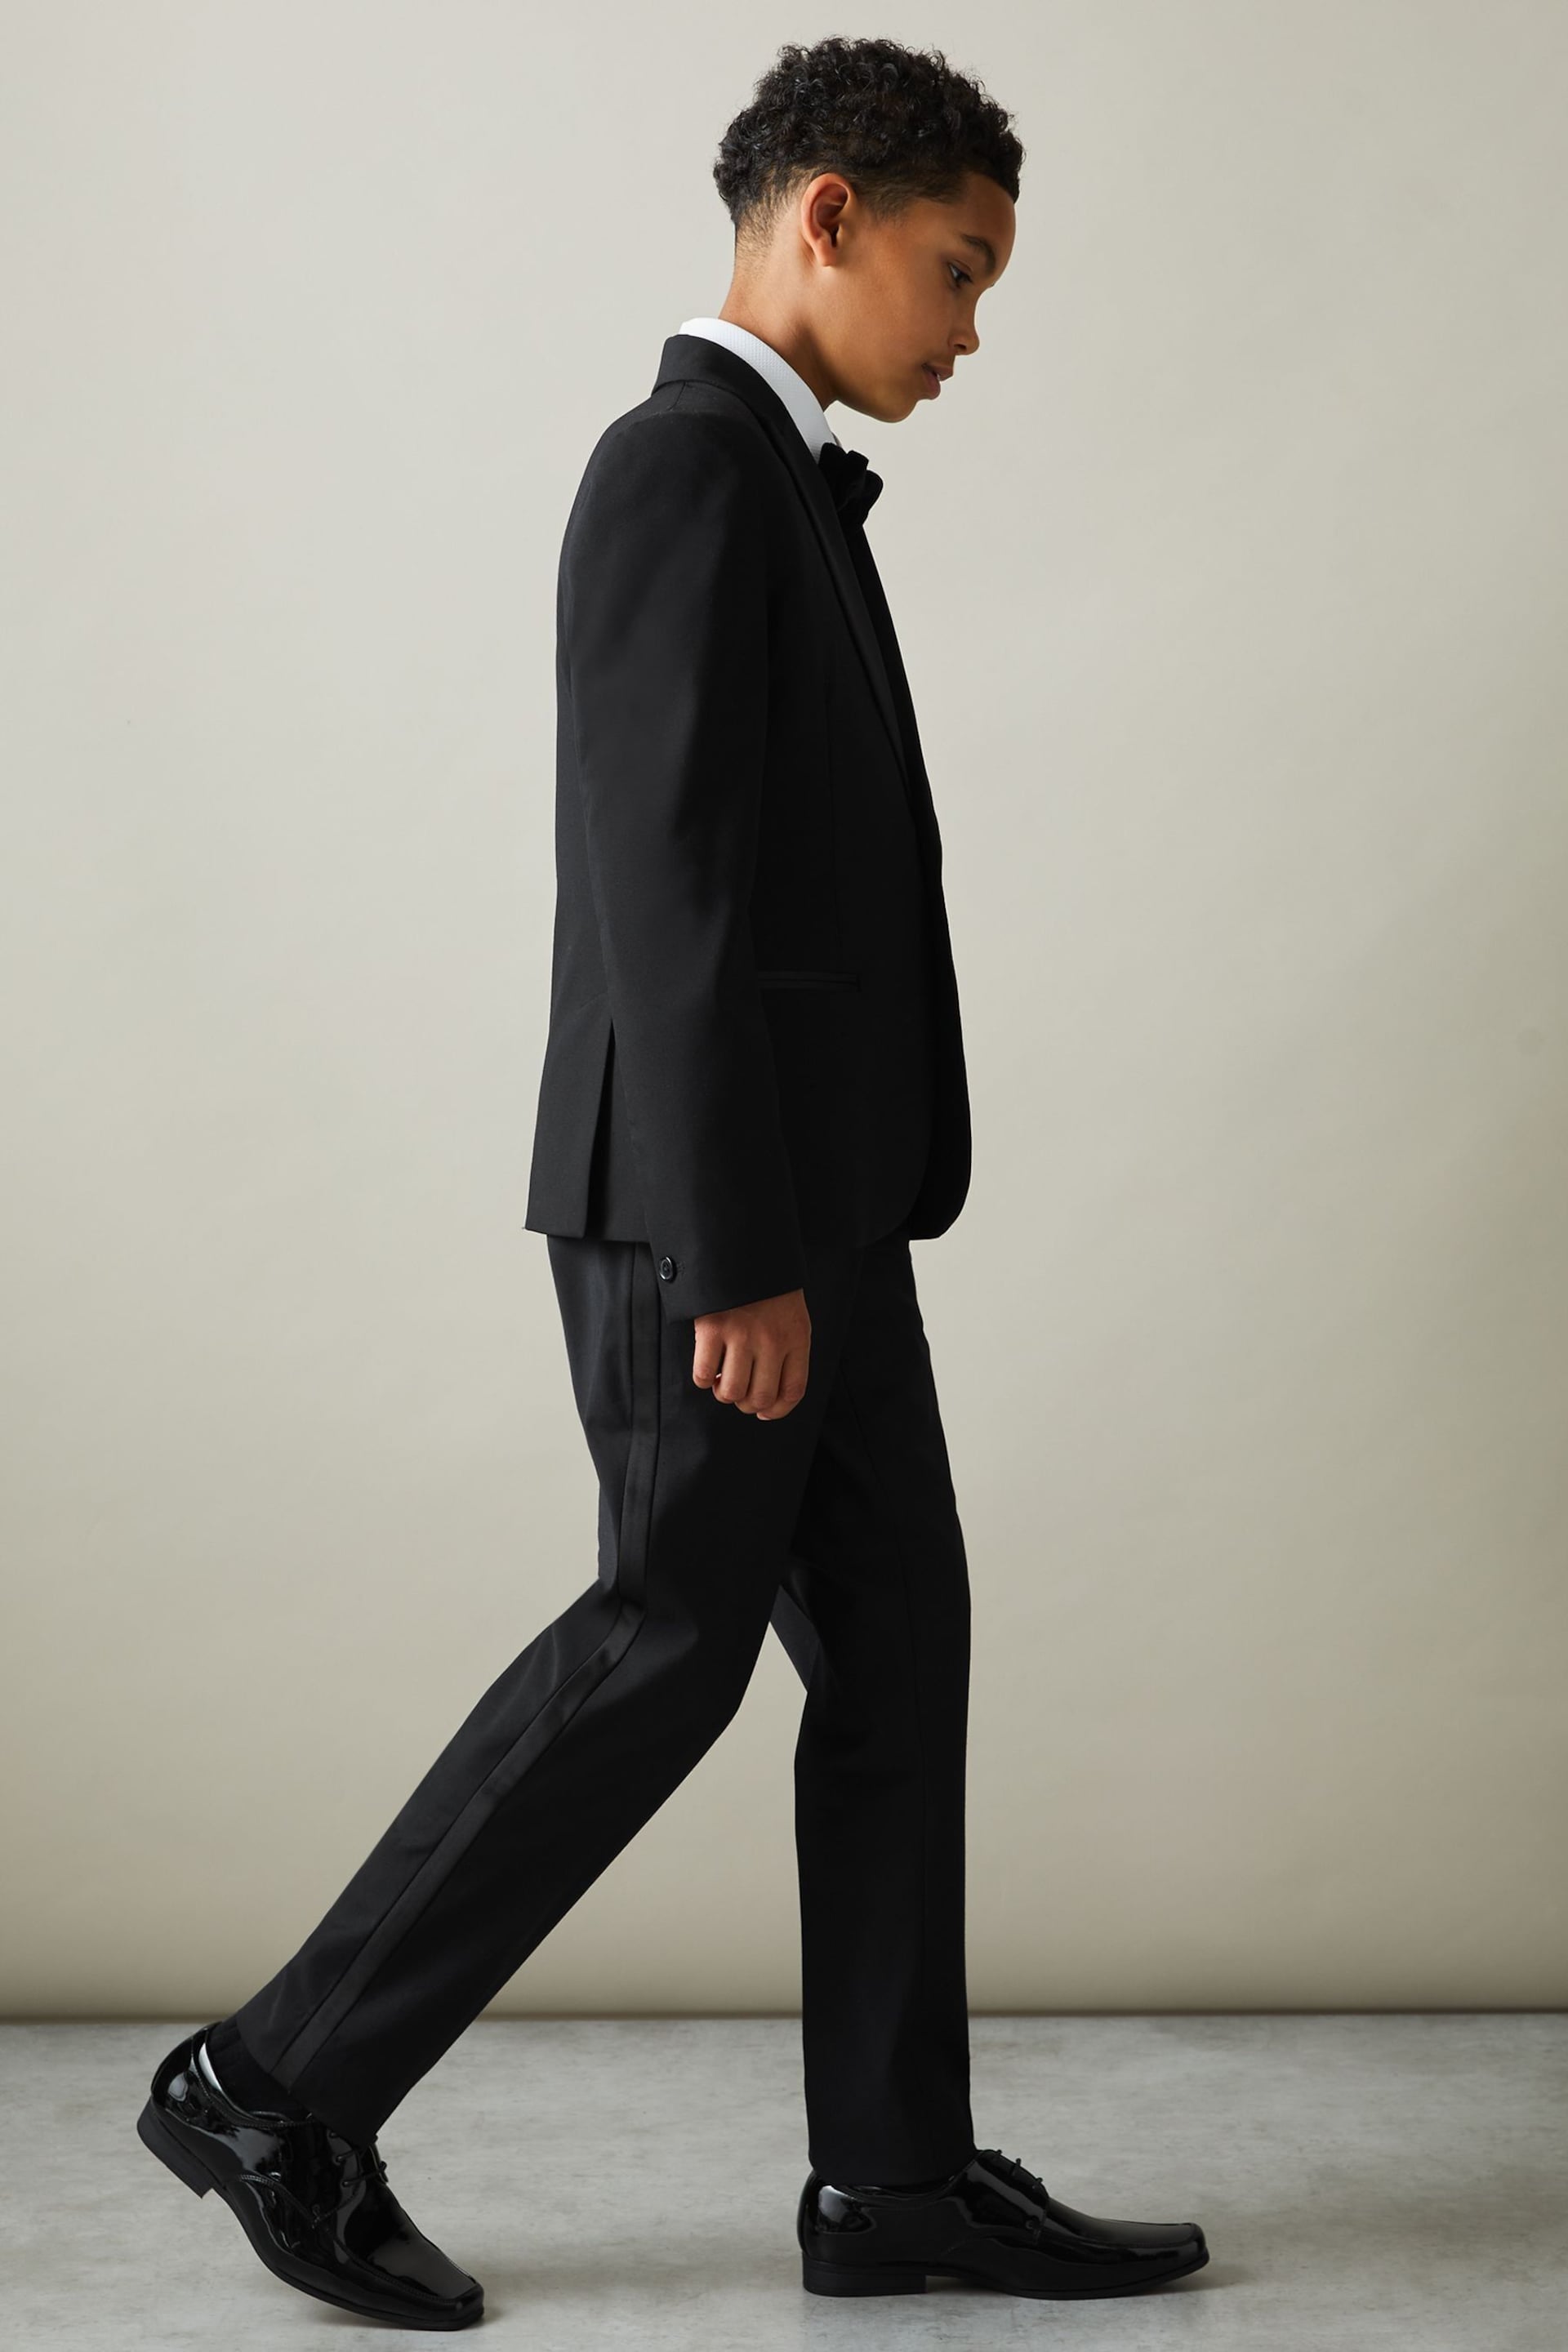 Reiss Black Knightsbridge T Tuxedo Satin Stripe Trousers - Image 3 of 4